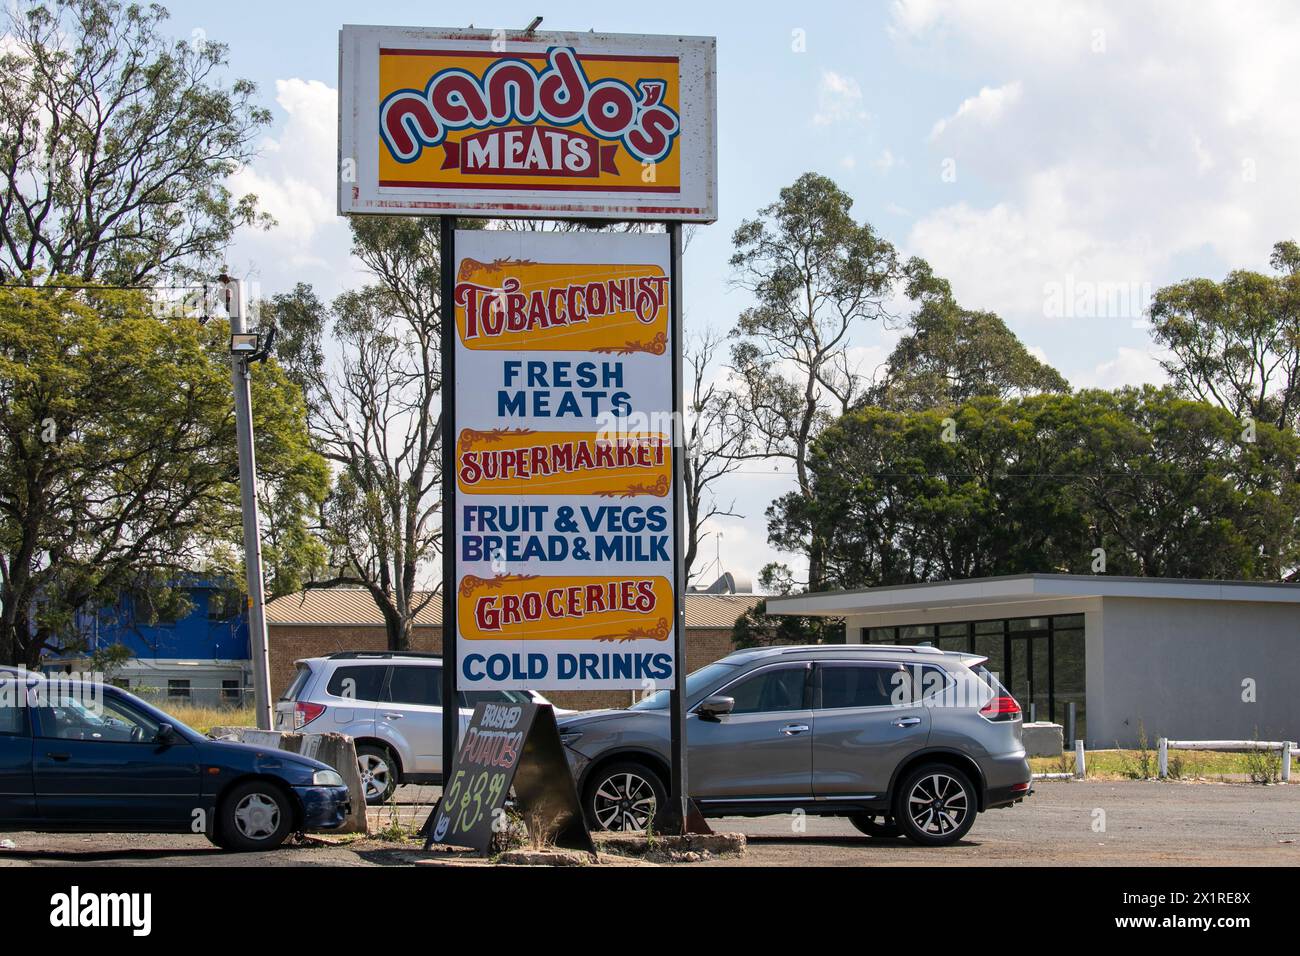 Nando's Meat Market and Tobacconist on Elizabeth drive in Kemps creek suburb, Greater Western Sydney region,NSW,Australia Stock Photo